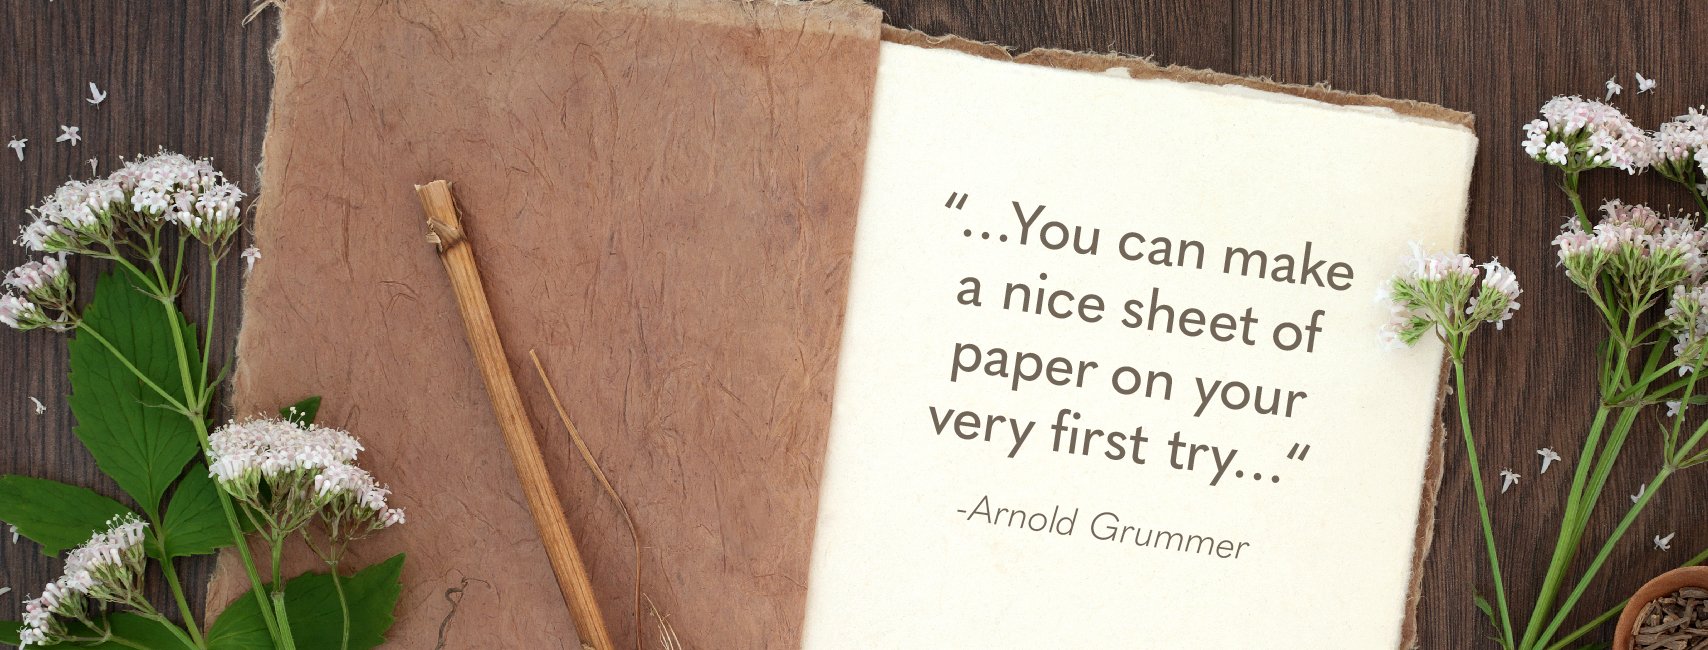 Arnold Grummer Papermaking